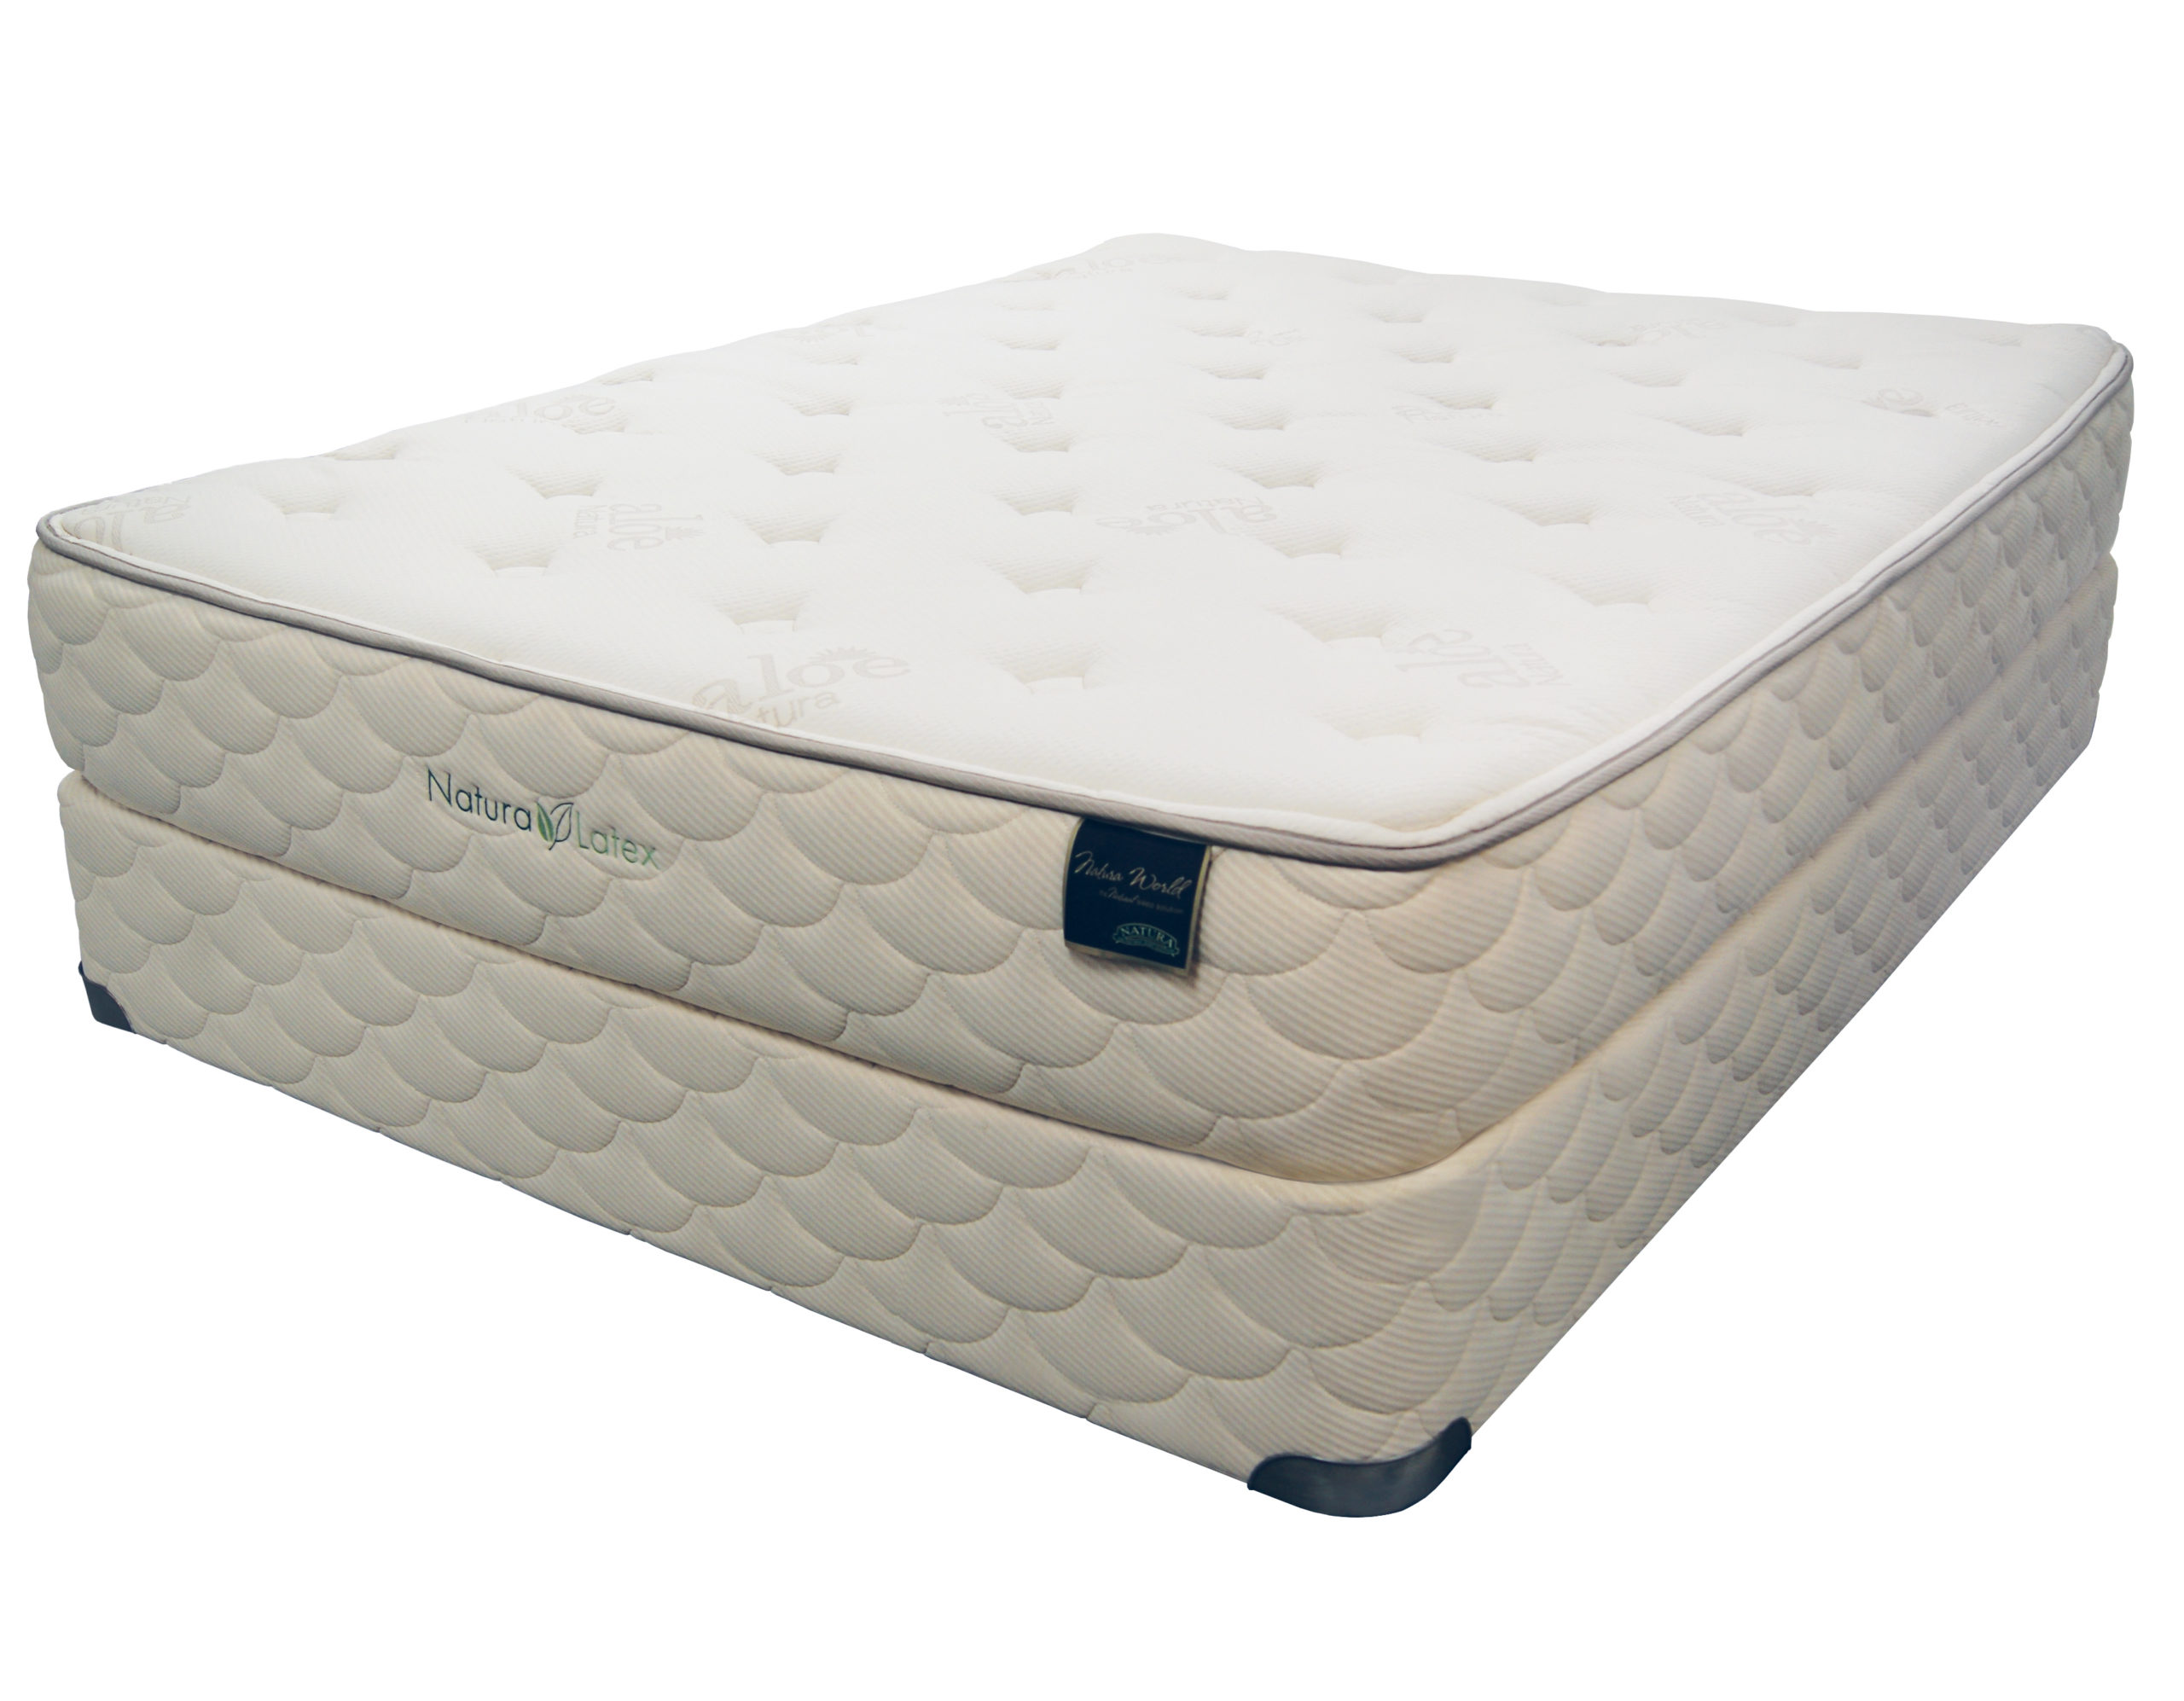 plush latex mattress reviews